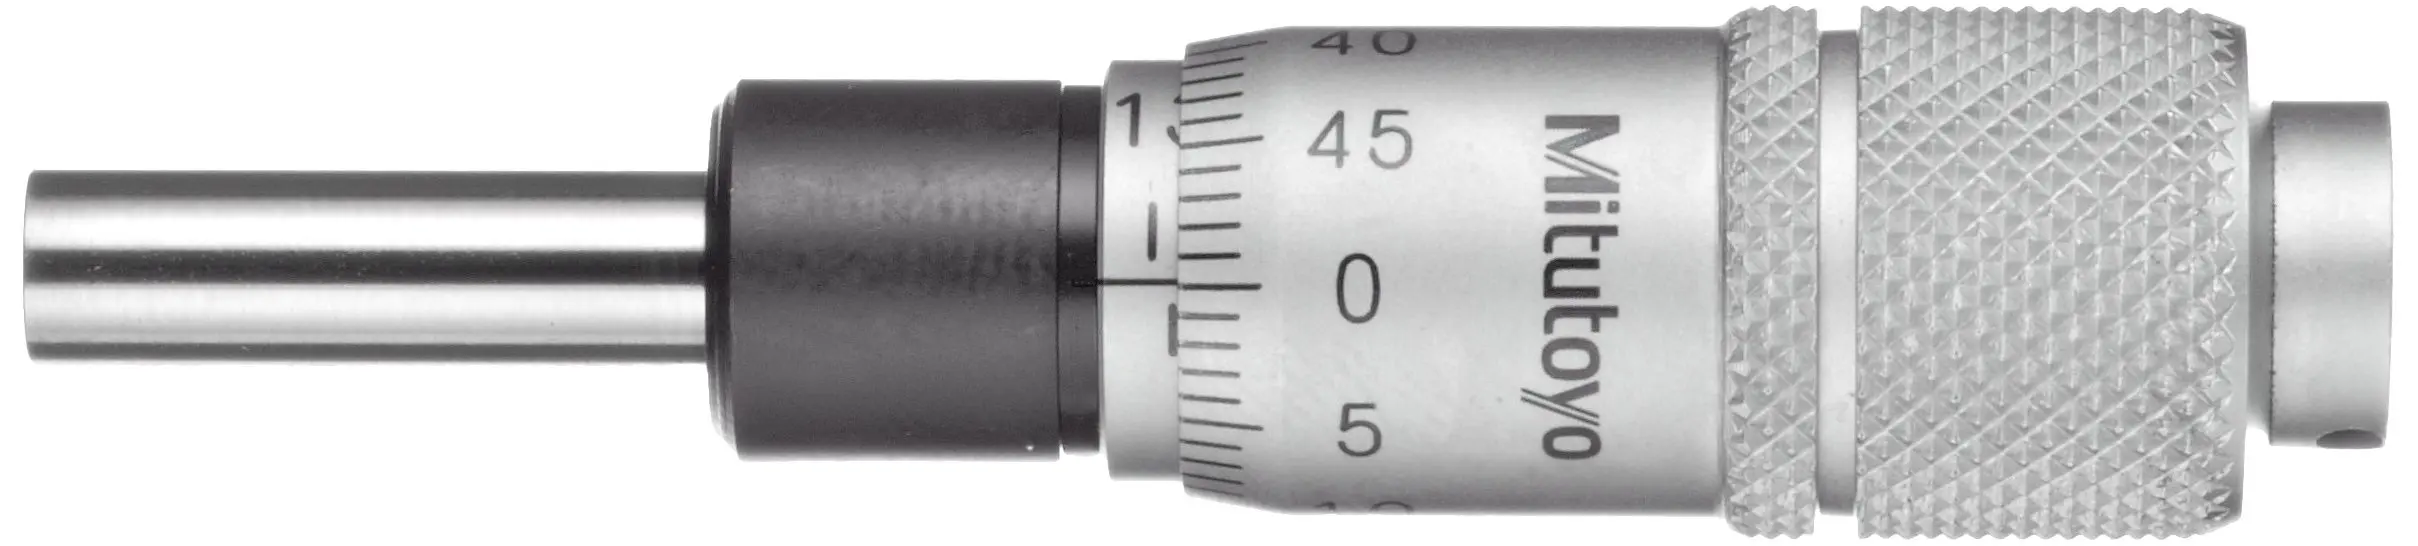 0-6.5mm Range Plain Thimble Flat Face 0.01mm Graduation Mitutoyo 148-201 Miniature Micrometer Head +//-0.005mm Accuracy